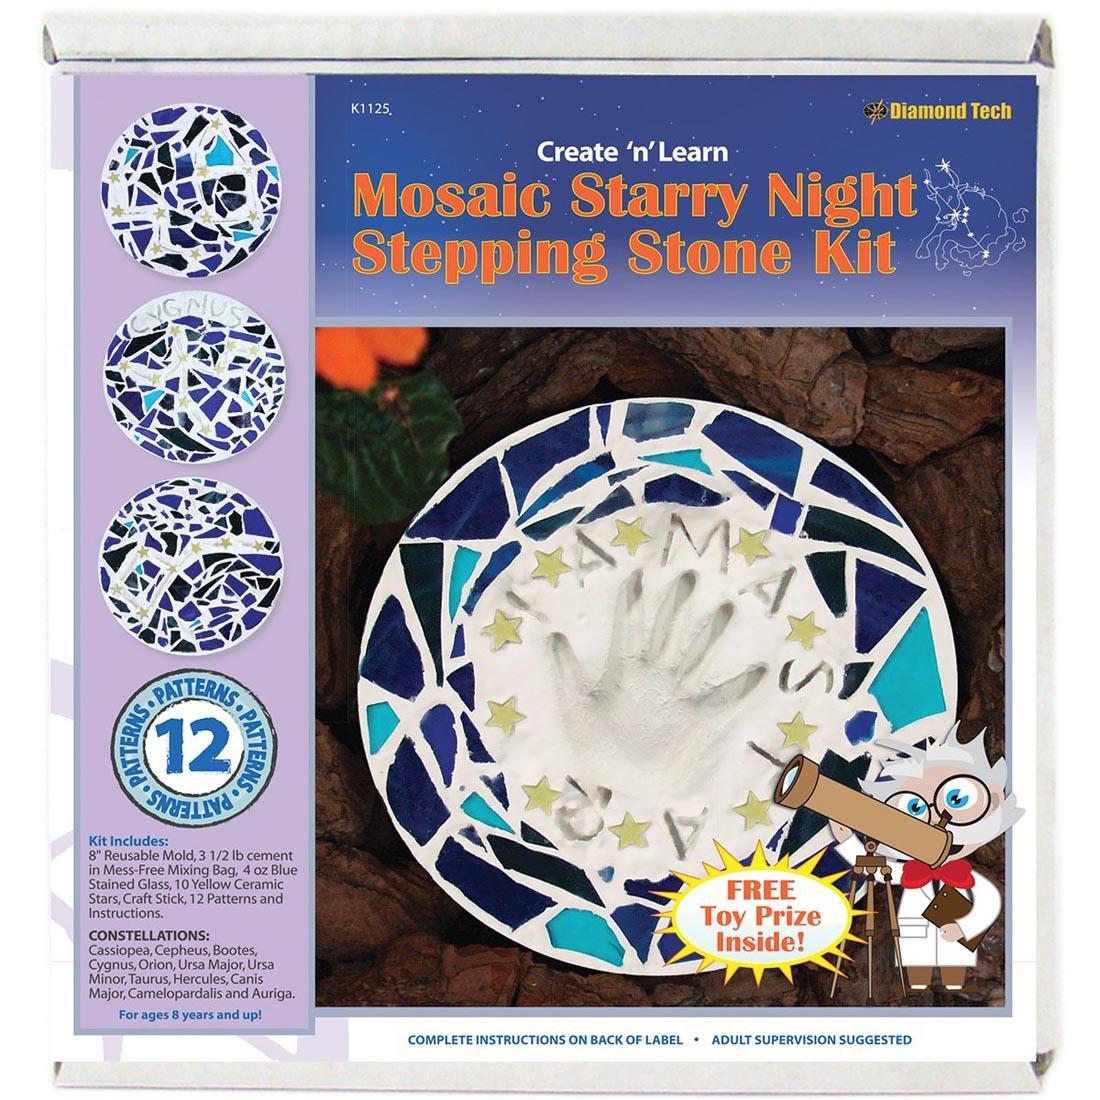 Mosaic Starry Night Stepping Stone Kit